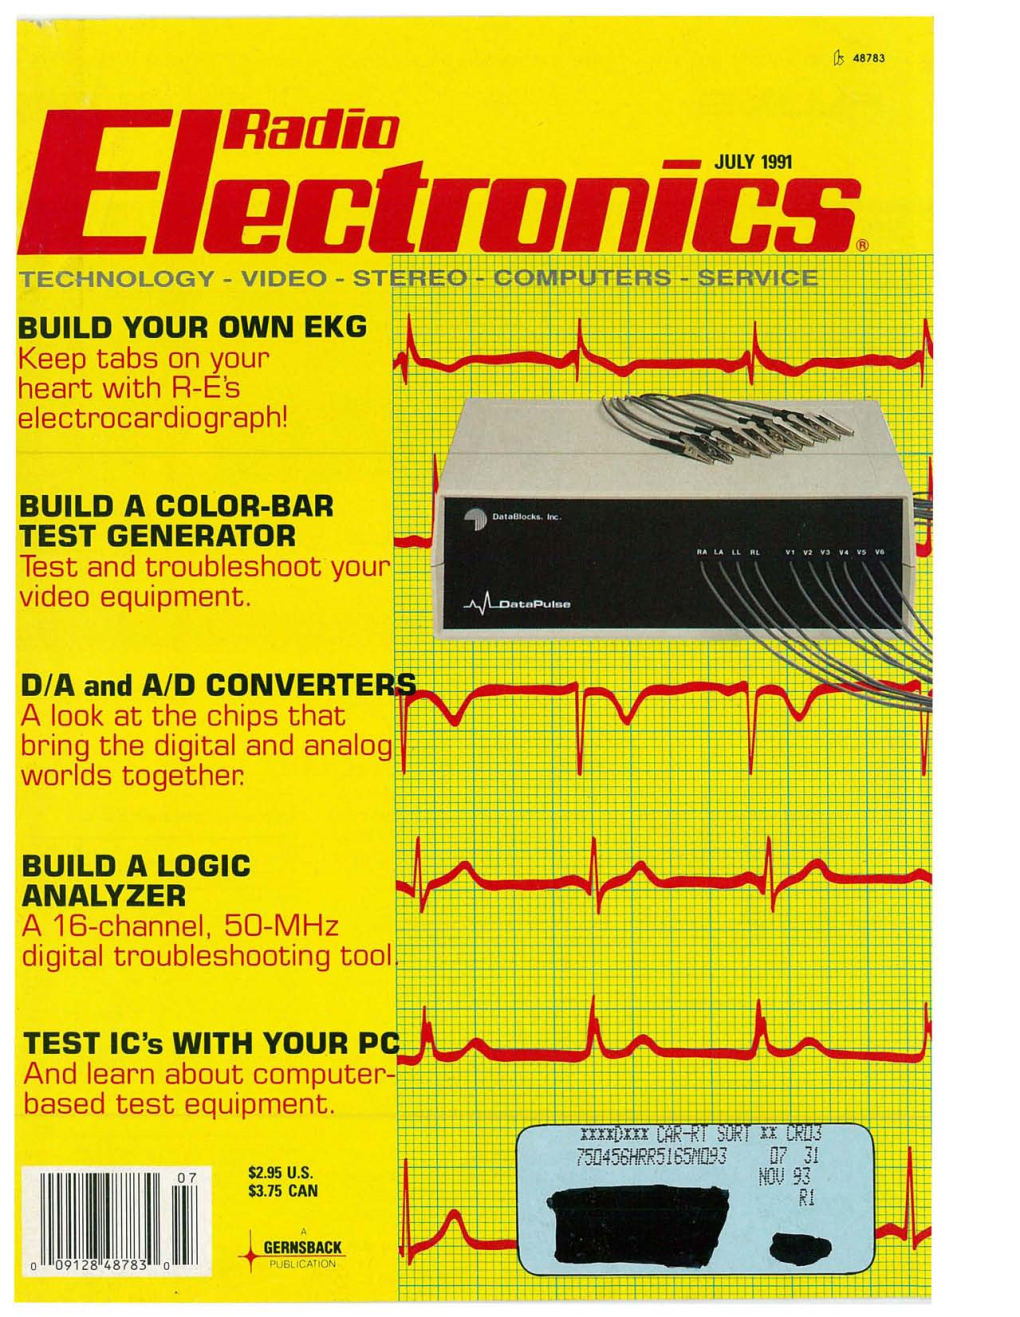 Radio Electronics July 1991